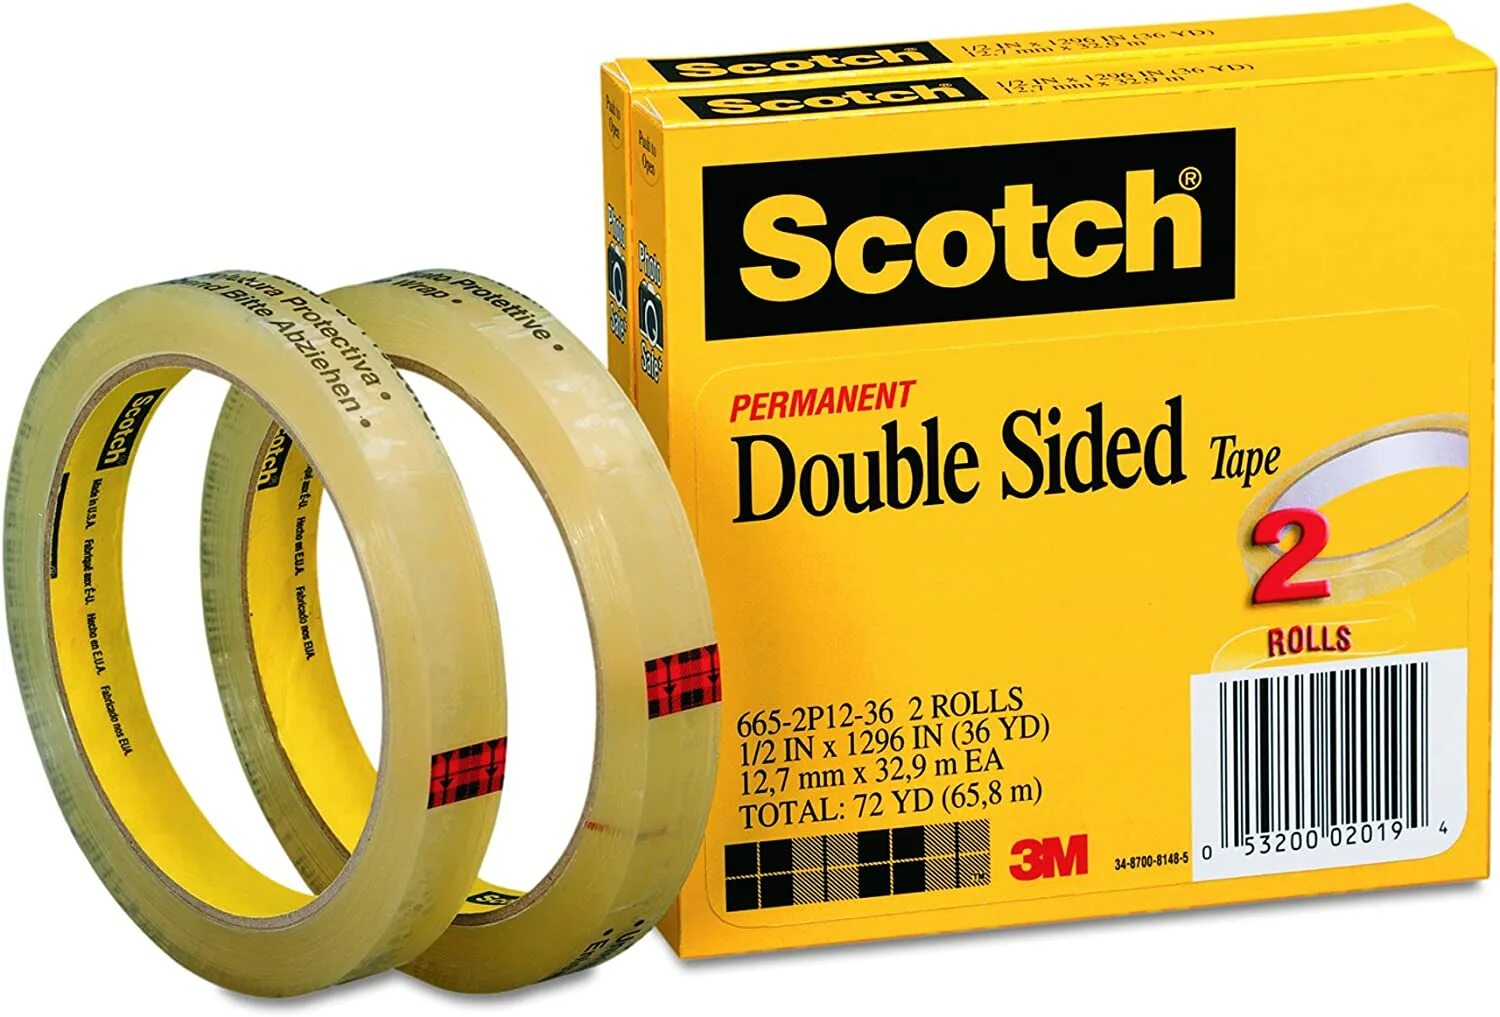 Scotch 3m permanent Double Sided Tape. Scotch Double Sided 3m. Scotch Double Sided Tape 1 SM. Scotch brand. Рейтинг скотча